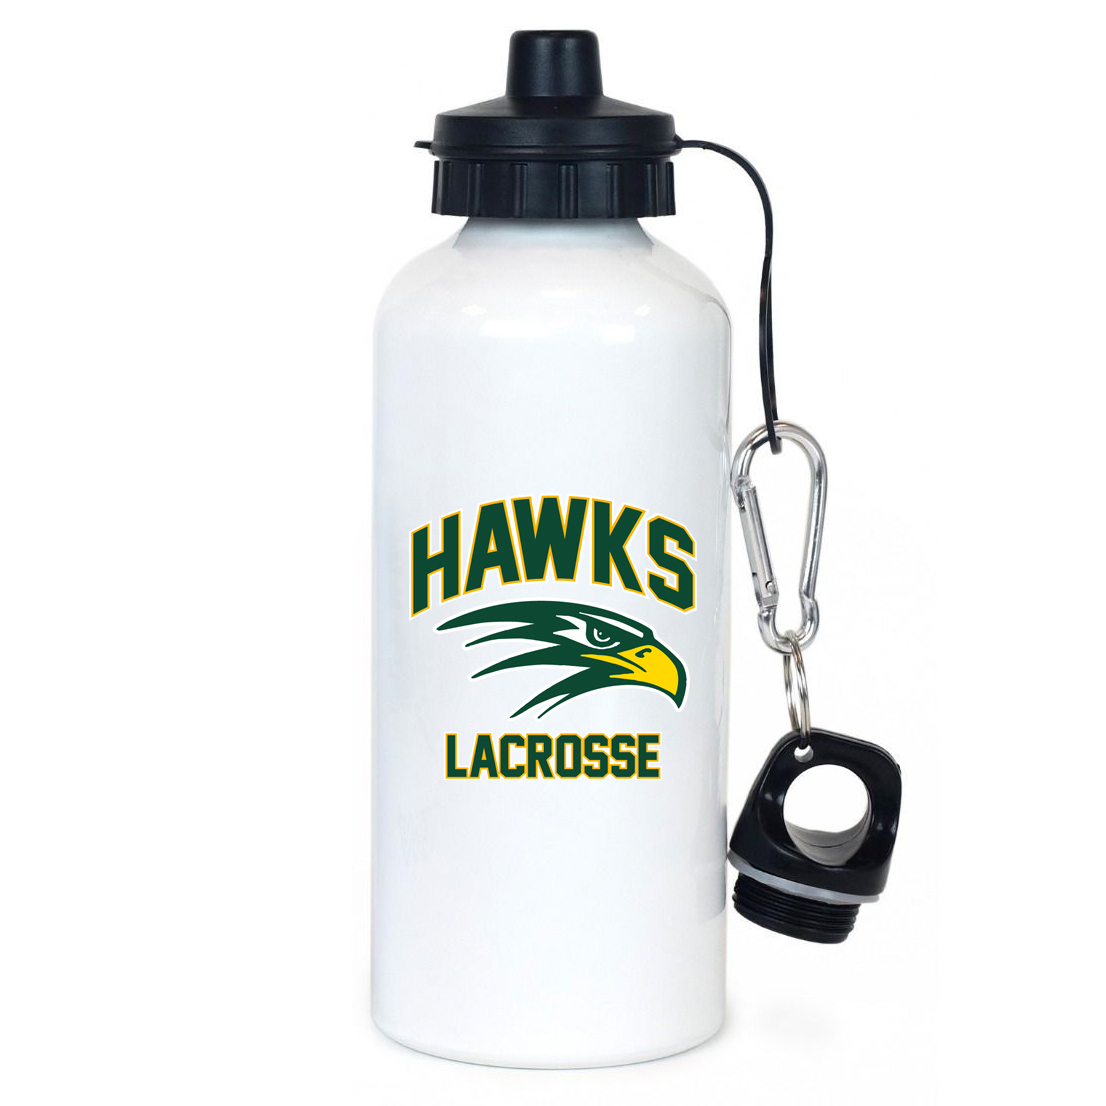 J.P. Stevens Lacrosse Team Water Bottle